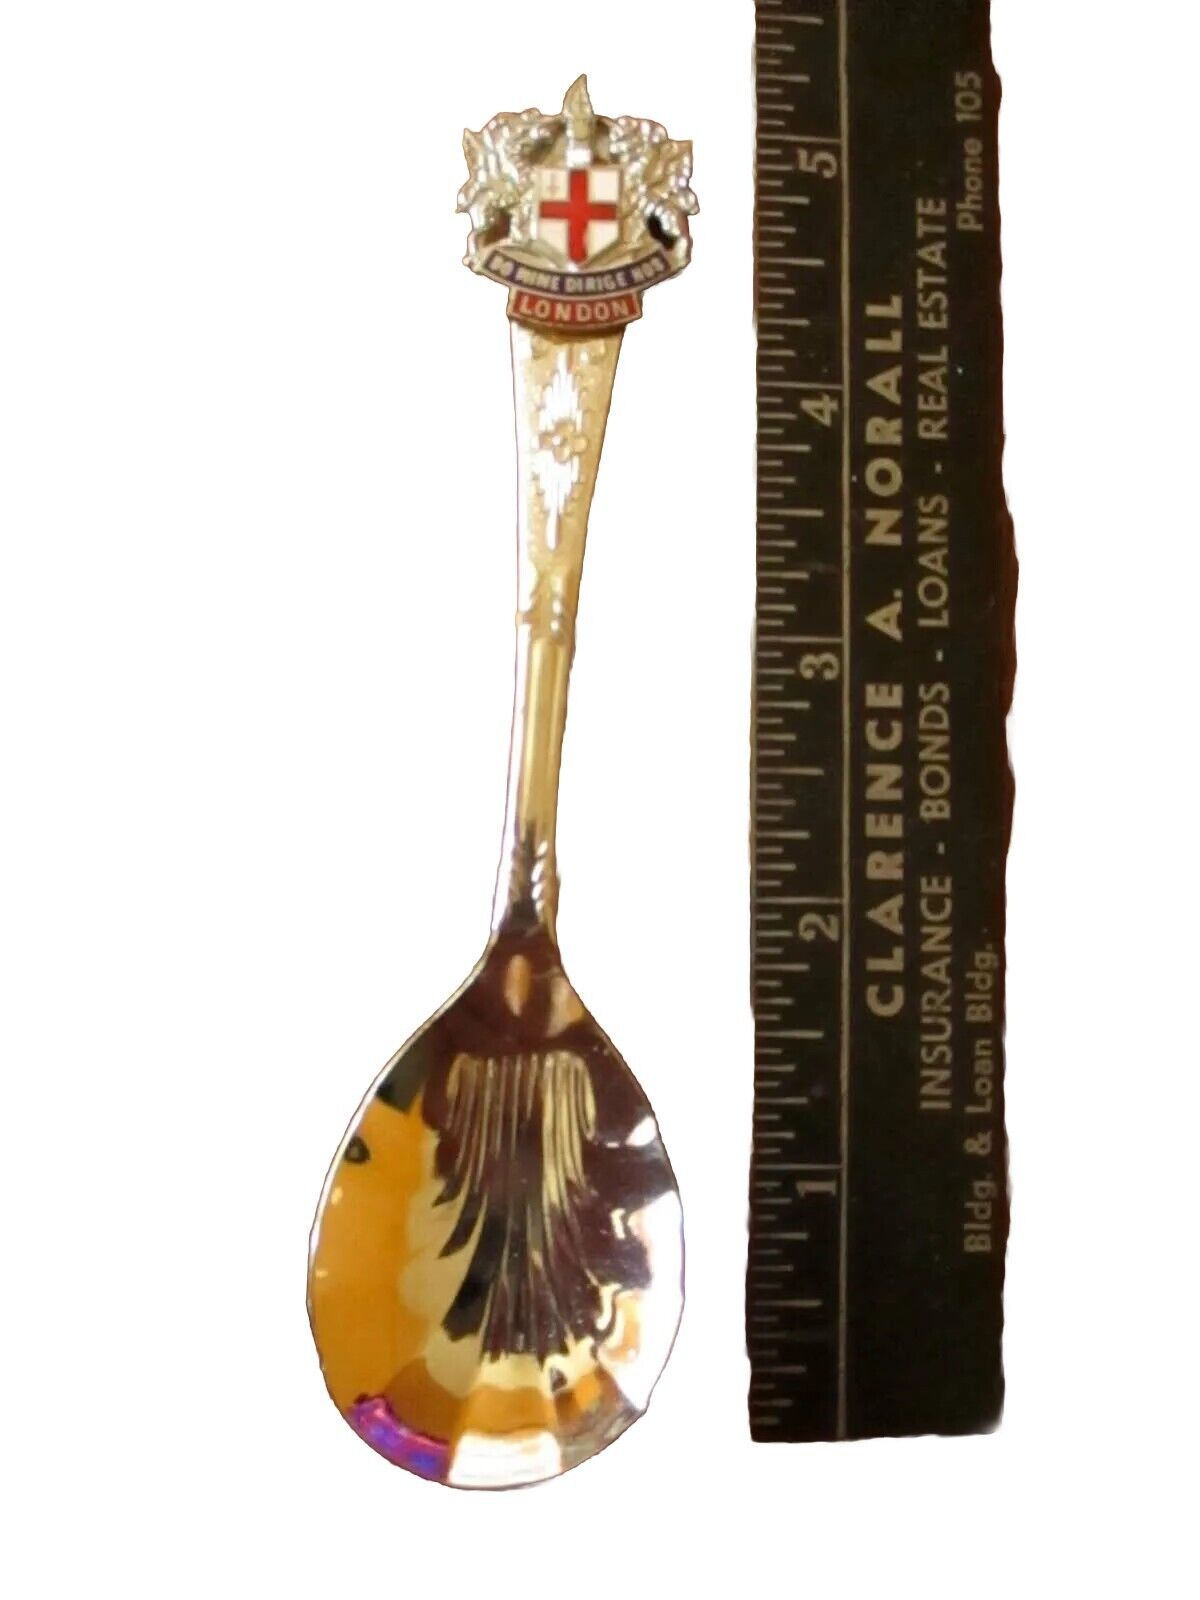 Vintage London DOMINE DIRIGE Spoon Souvenir